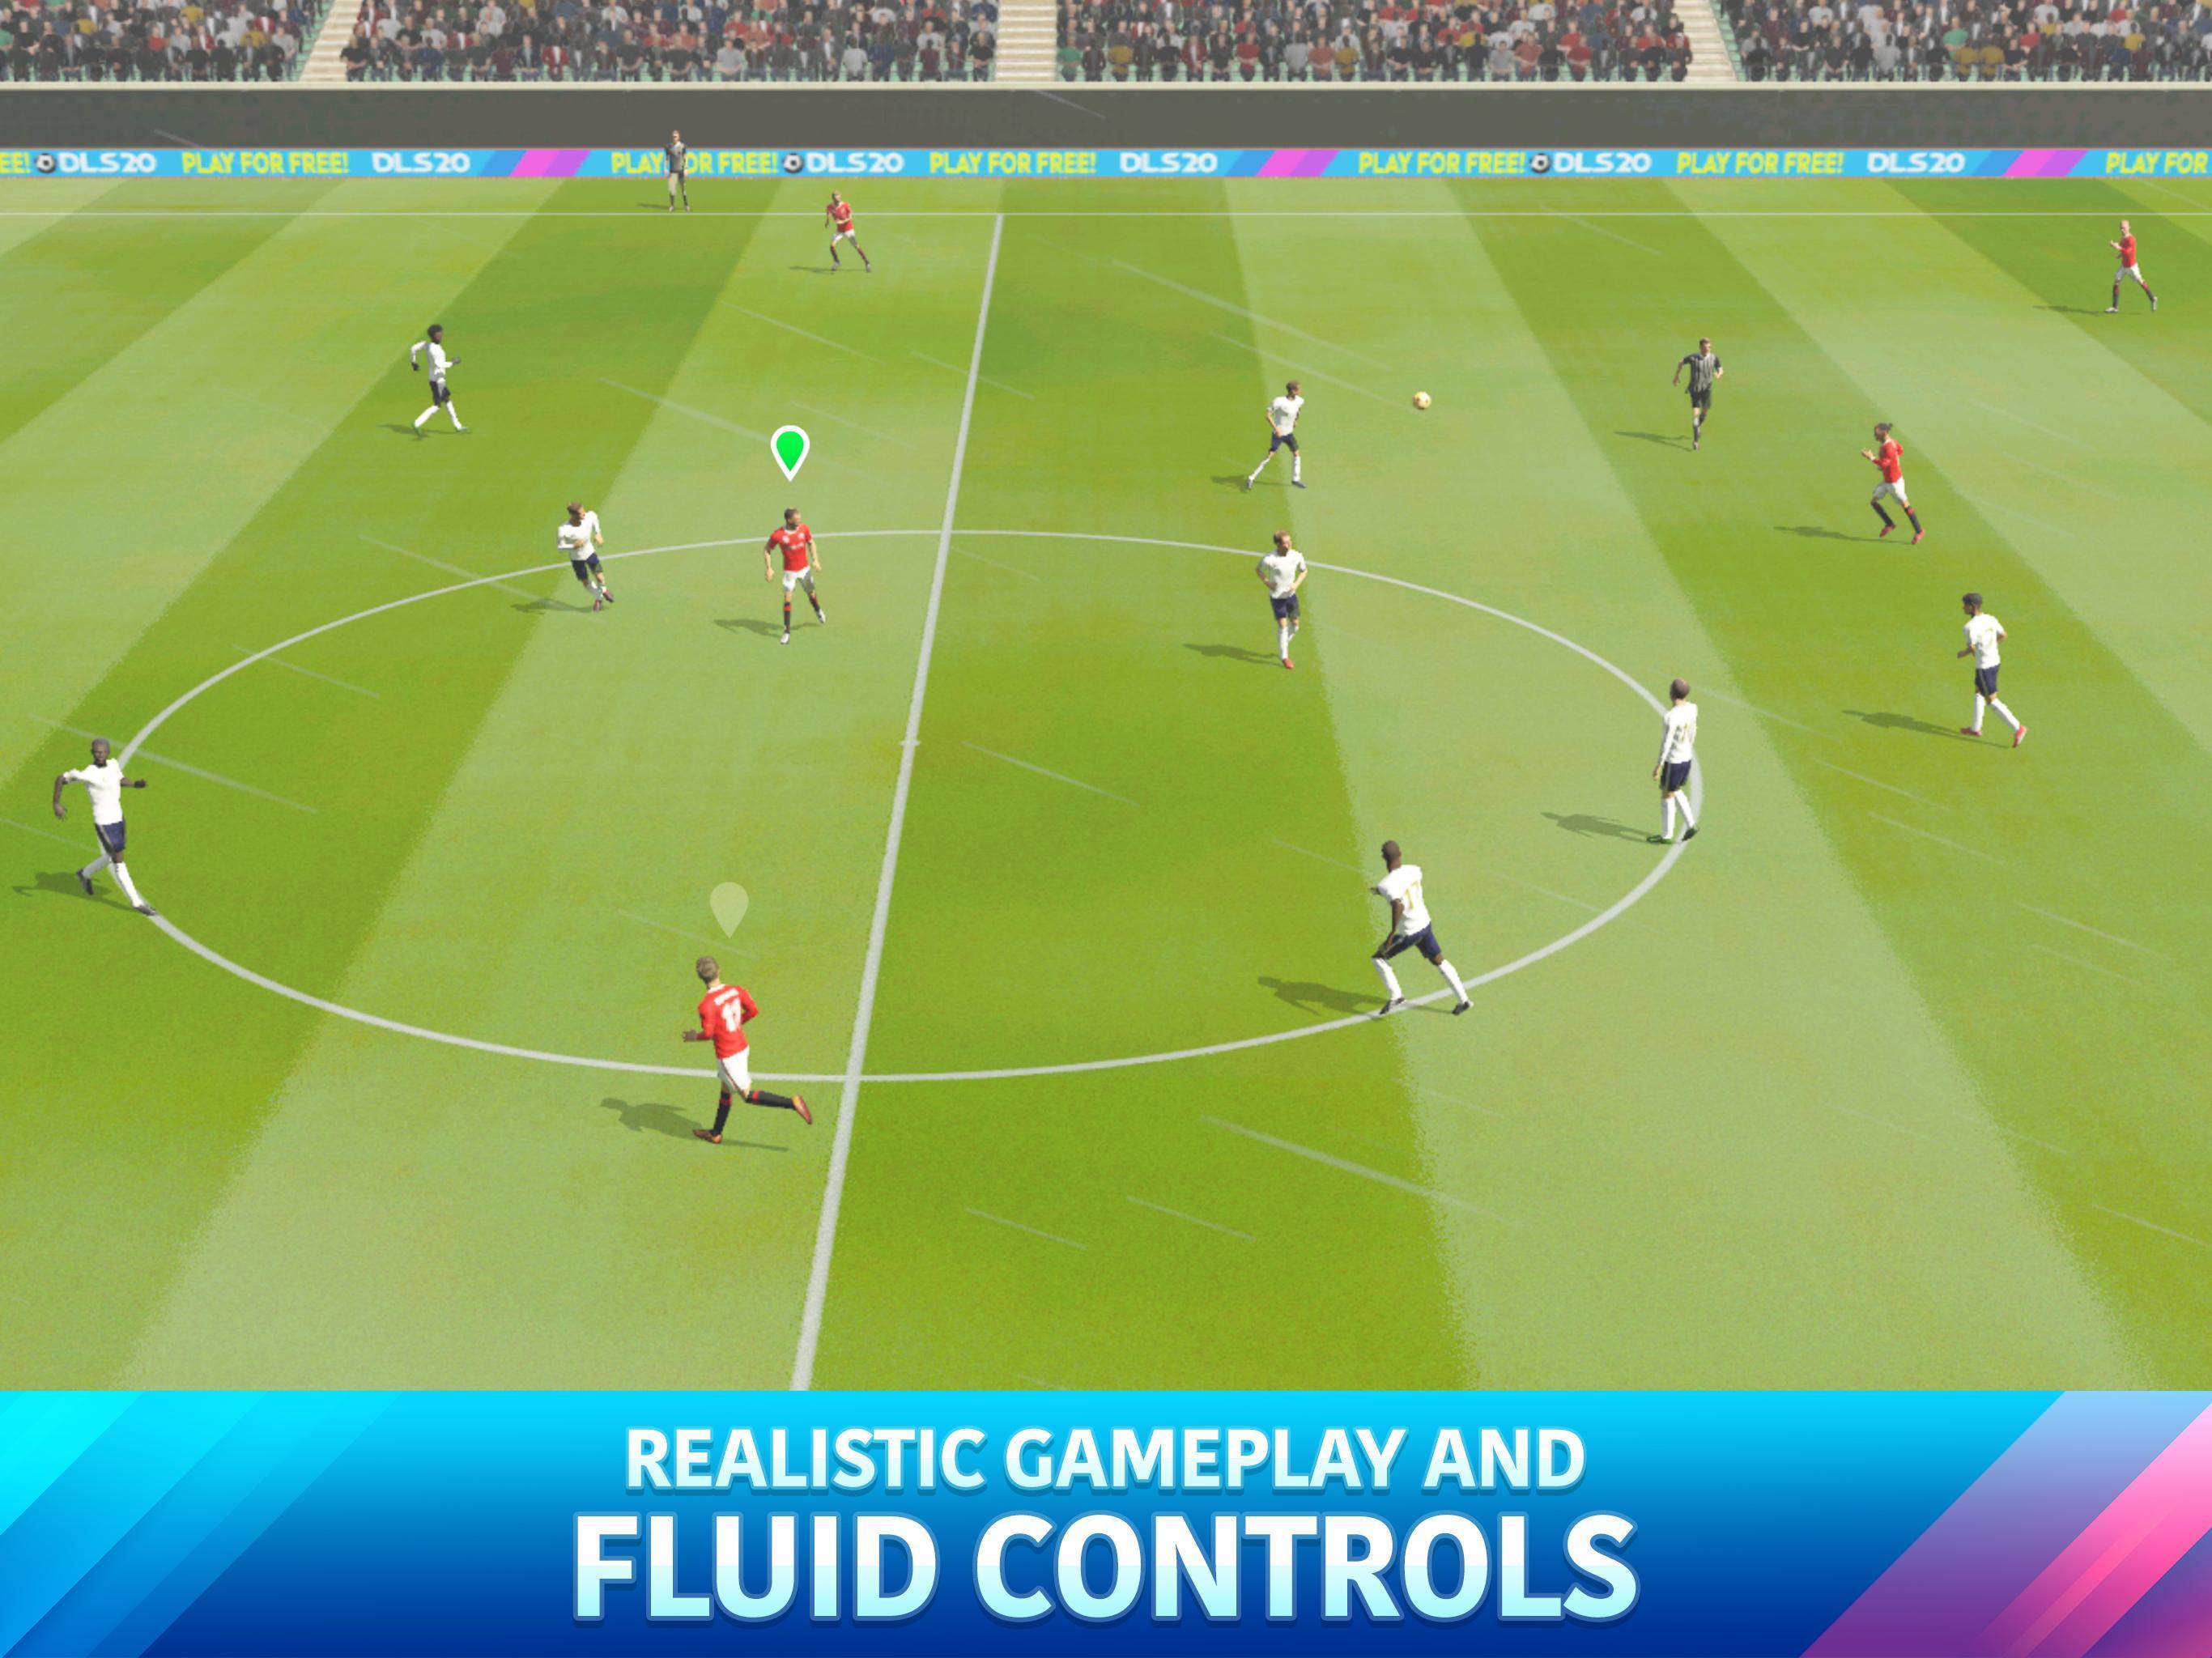 Dream League Soccer 2020-DLS 20 TIPS & WALLP APK pour Android